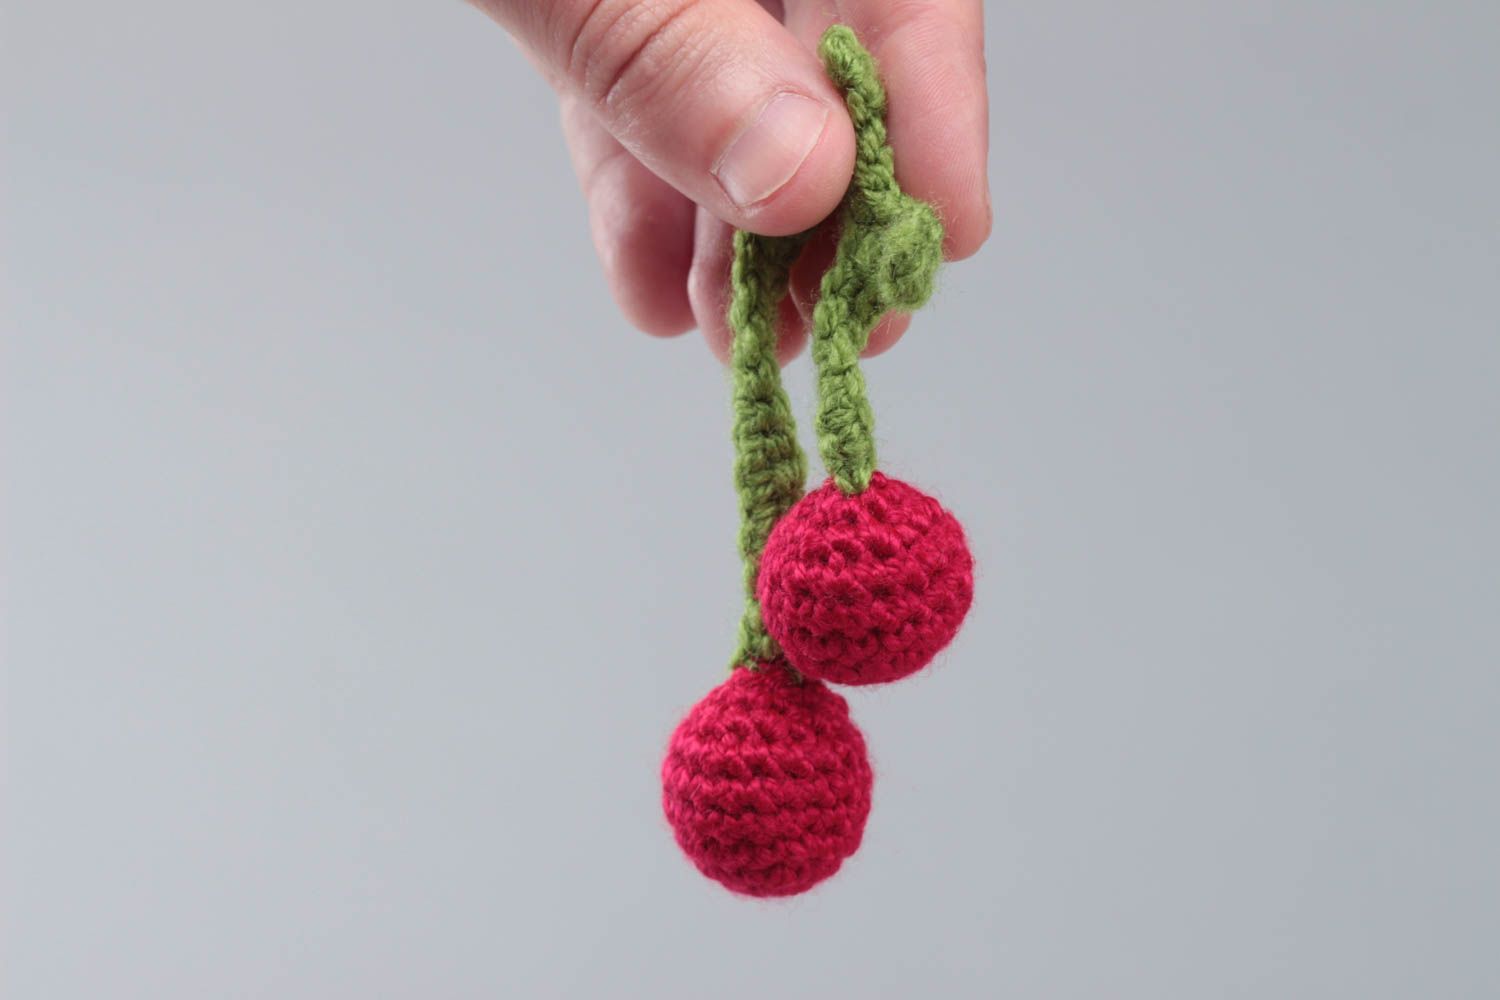 Handmade small designer crochet soft toy cherry for kids and interior decor photo 5